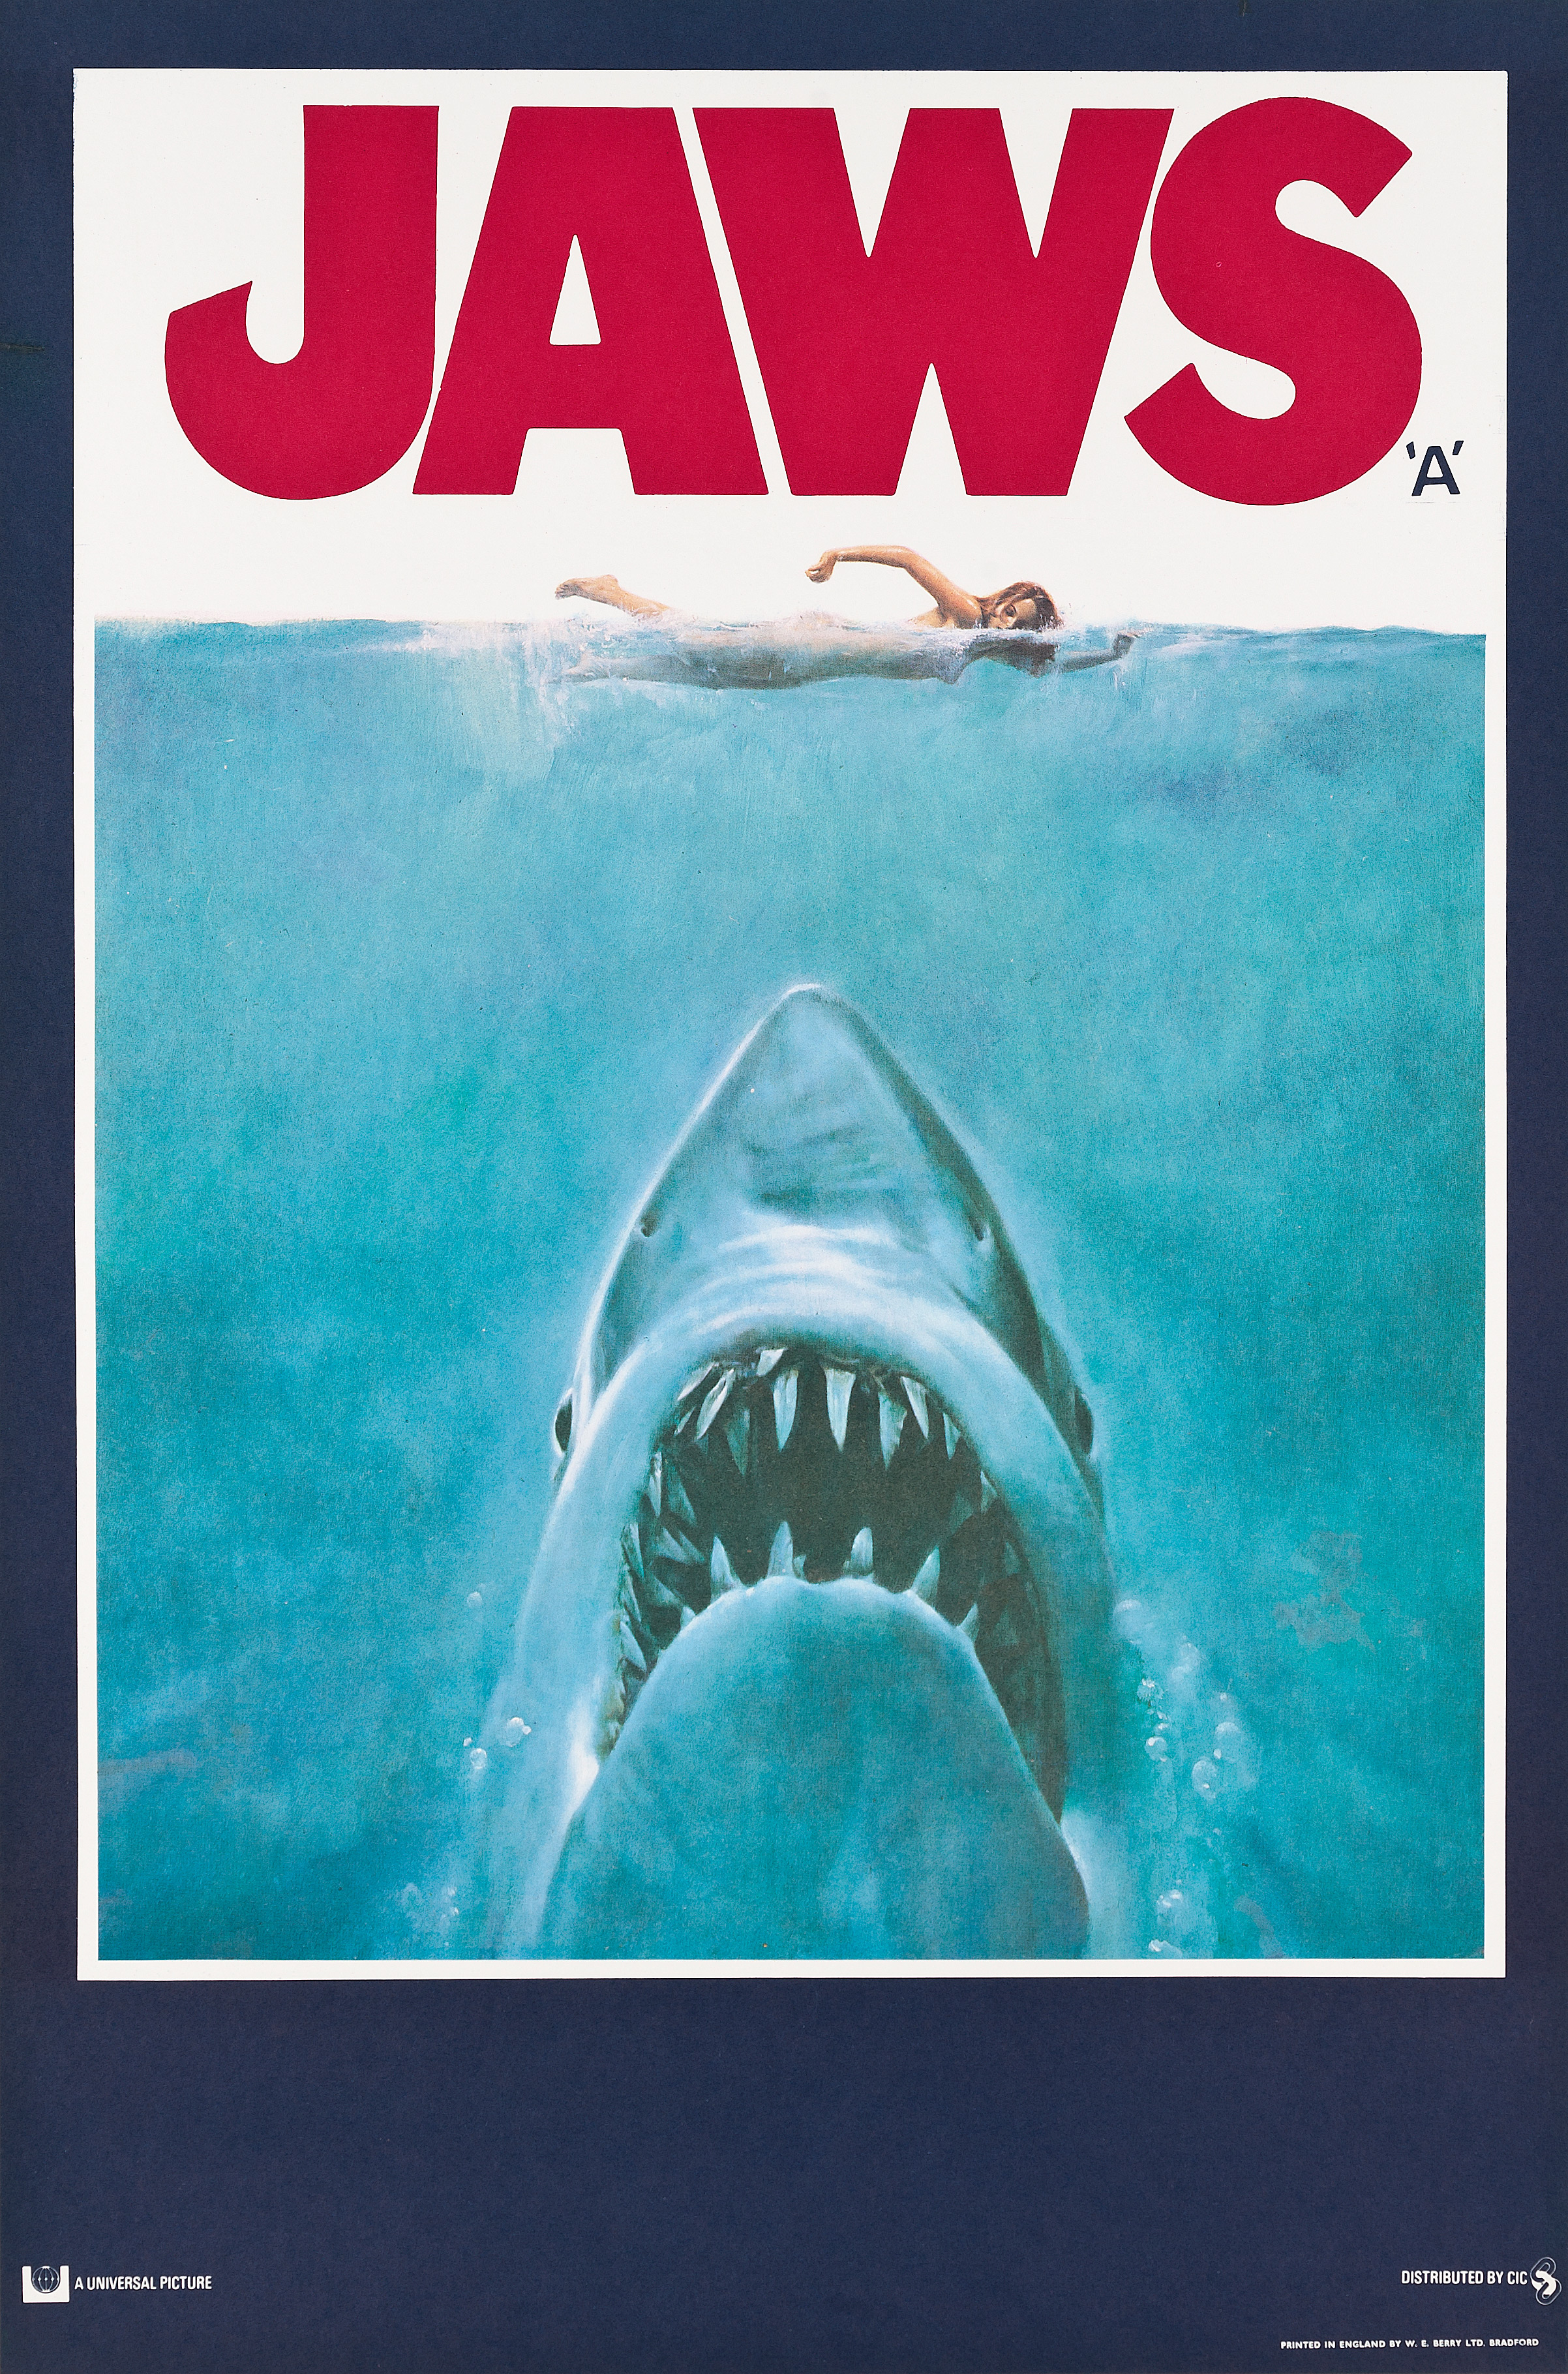 JAWS, MICK MCGINTY, Directed by: Steven Spielberg, Starring: Roy Scheider, Robert Shaw, Richard Dreyfuss